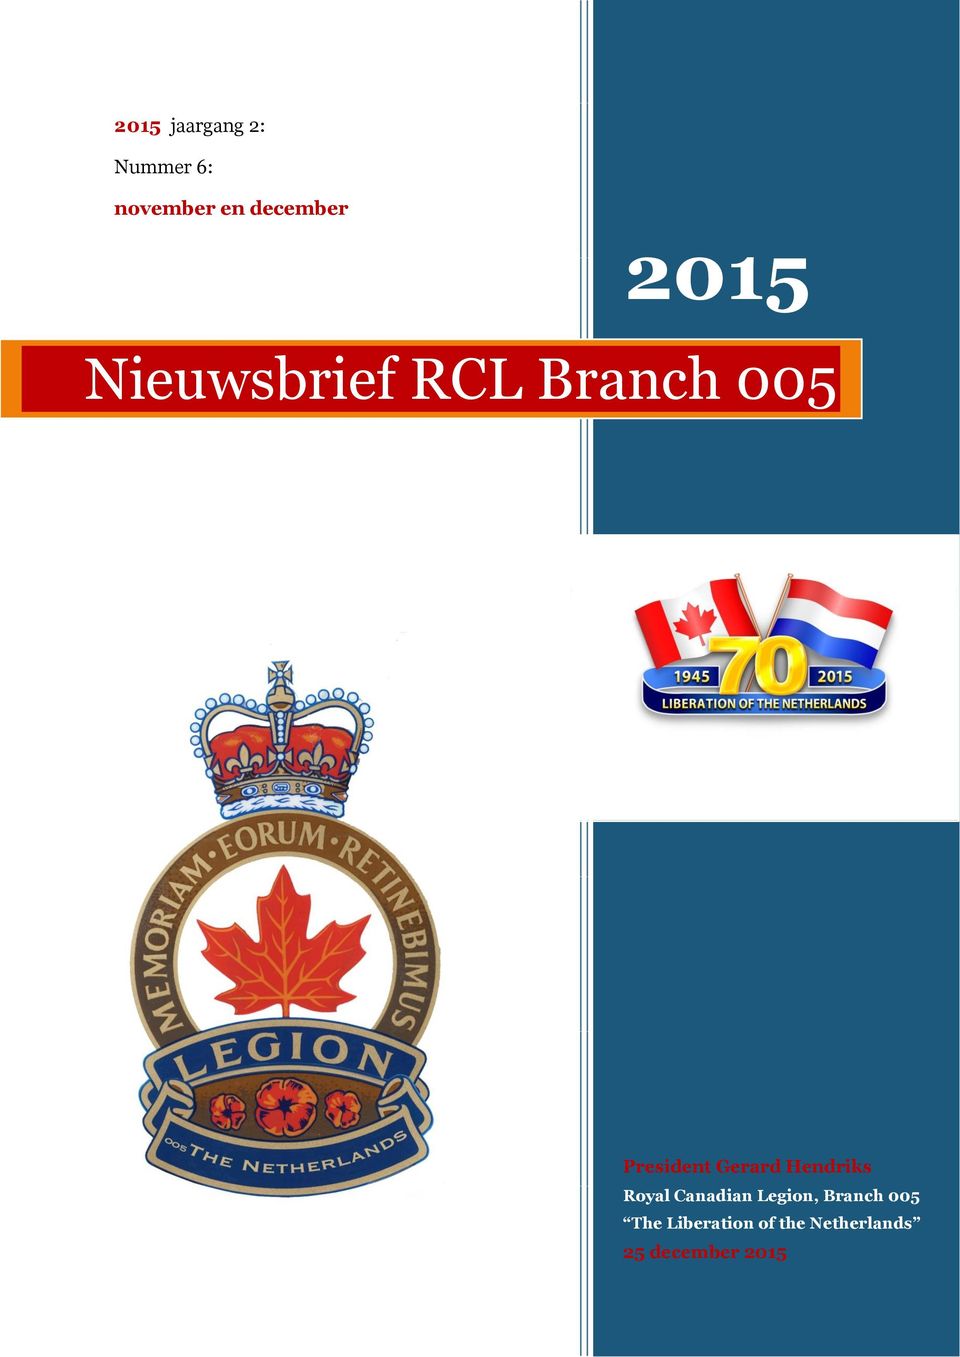 Gerard Hendriks Royal Canadian Legion, Branch